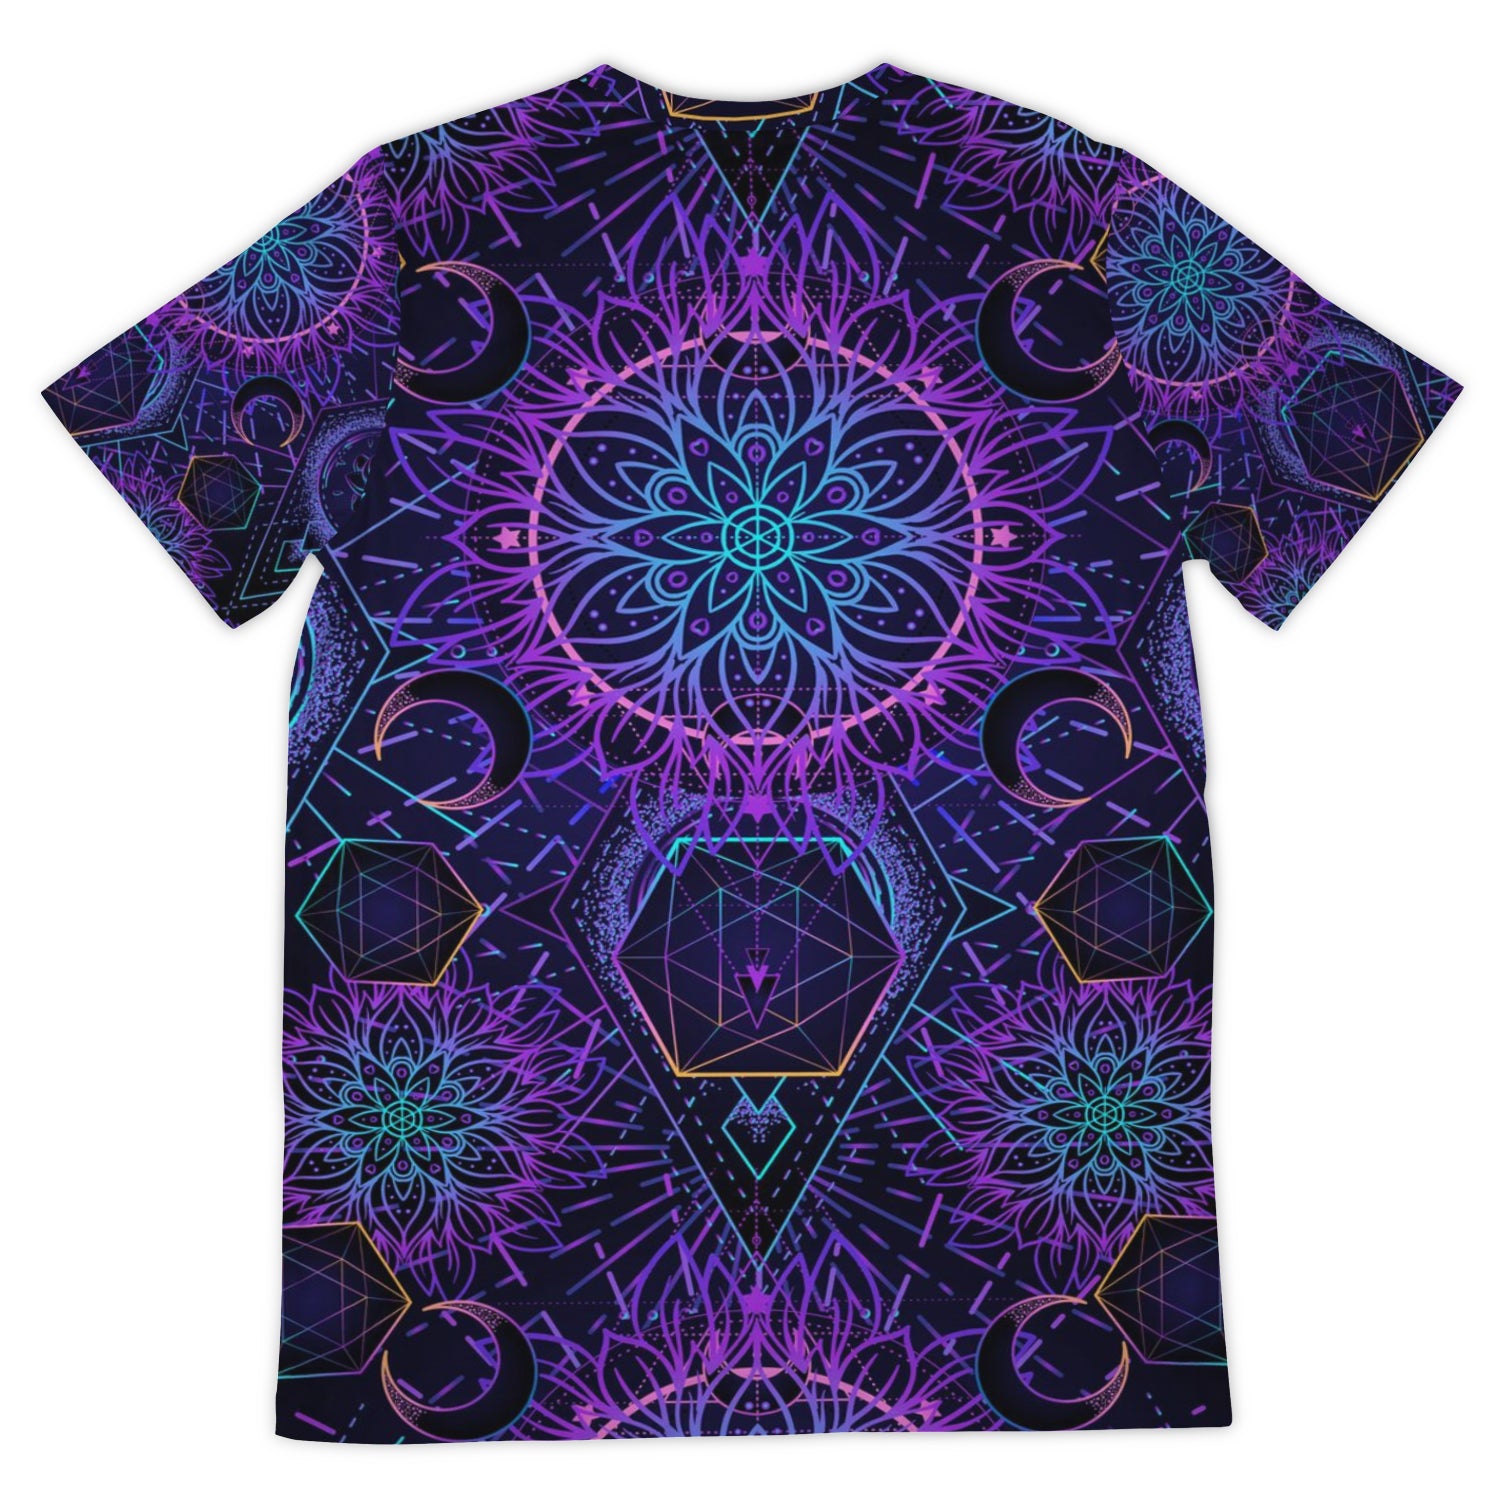 Bassnectar T-Shirt - Trippy Bassnectar Festival Sacred Geometry Psychedelic Shirt - Mind Gone